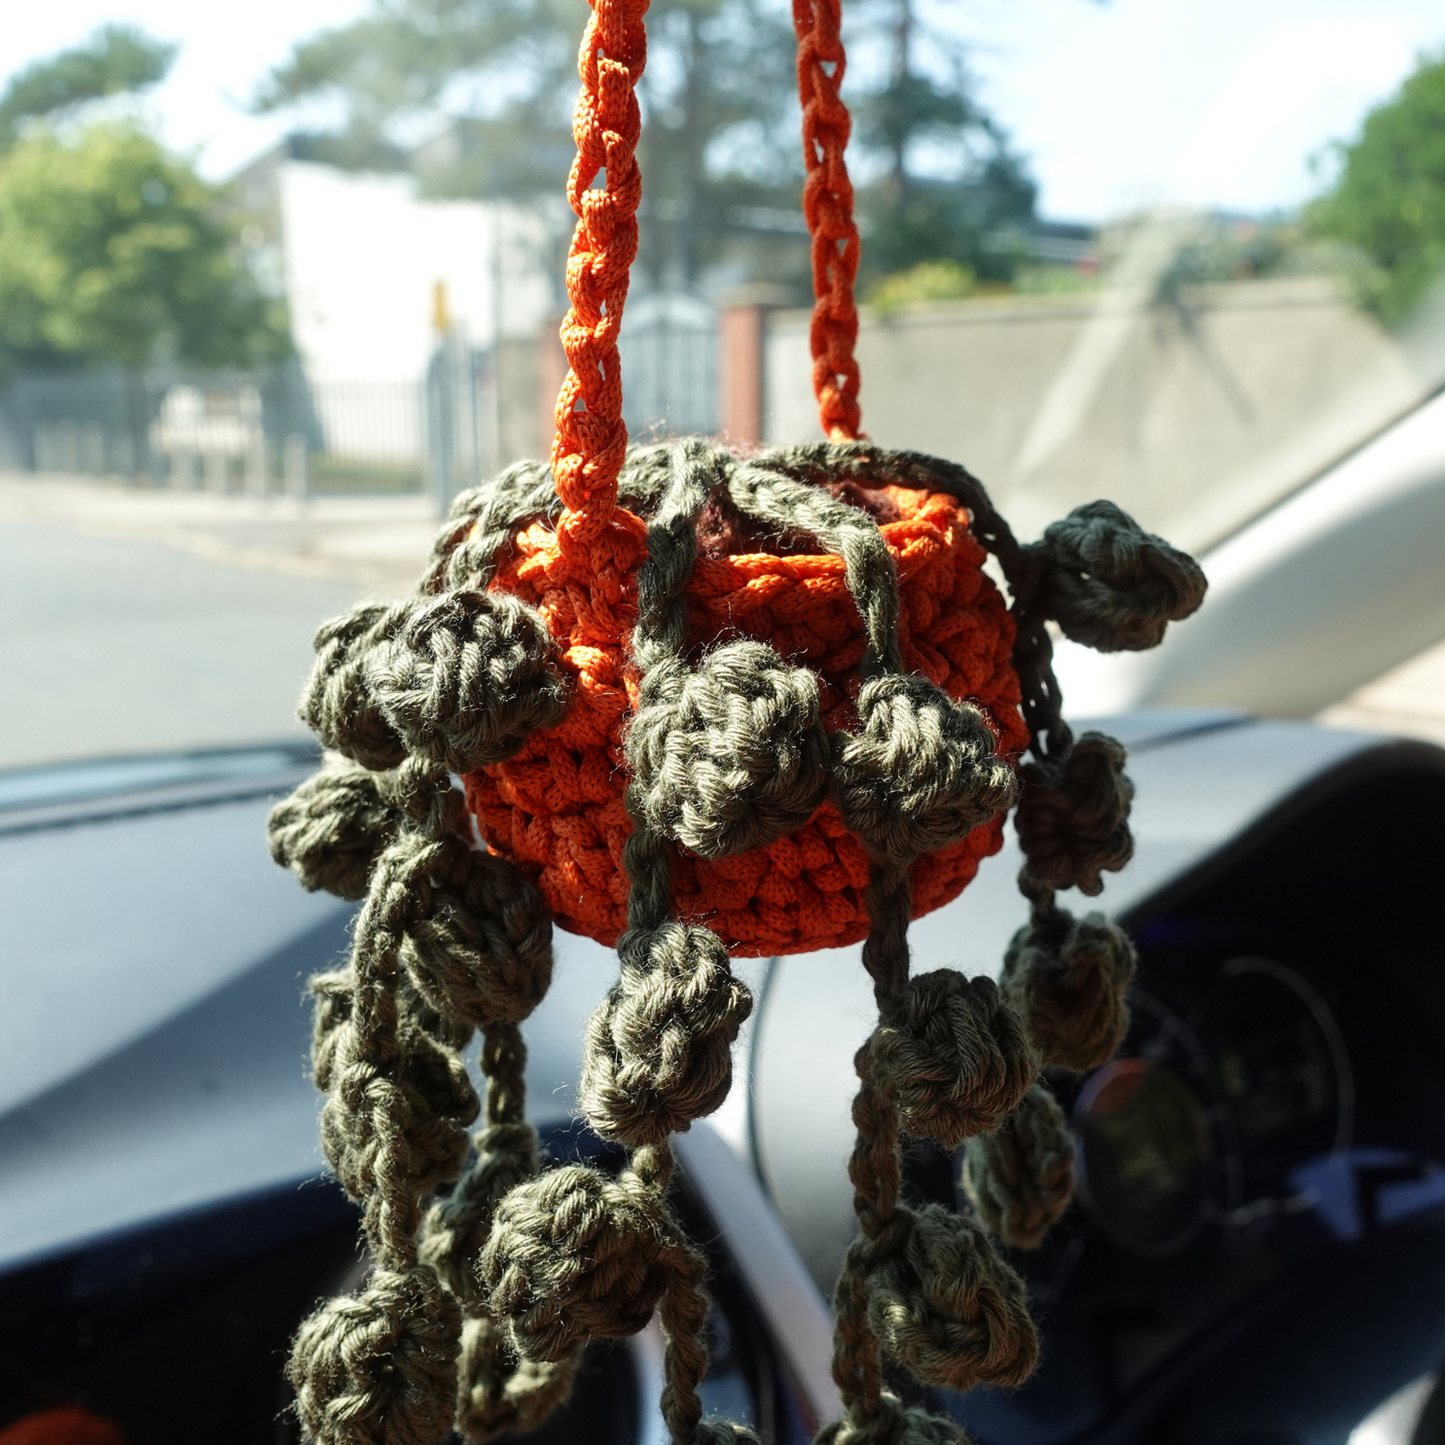 Crochet Mini Hanging Plant Pot WRITTEN PATTERN, Crochet Plant Pot, Brunaticality